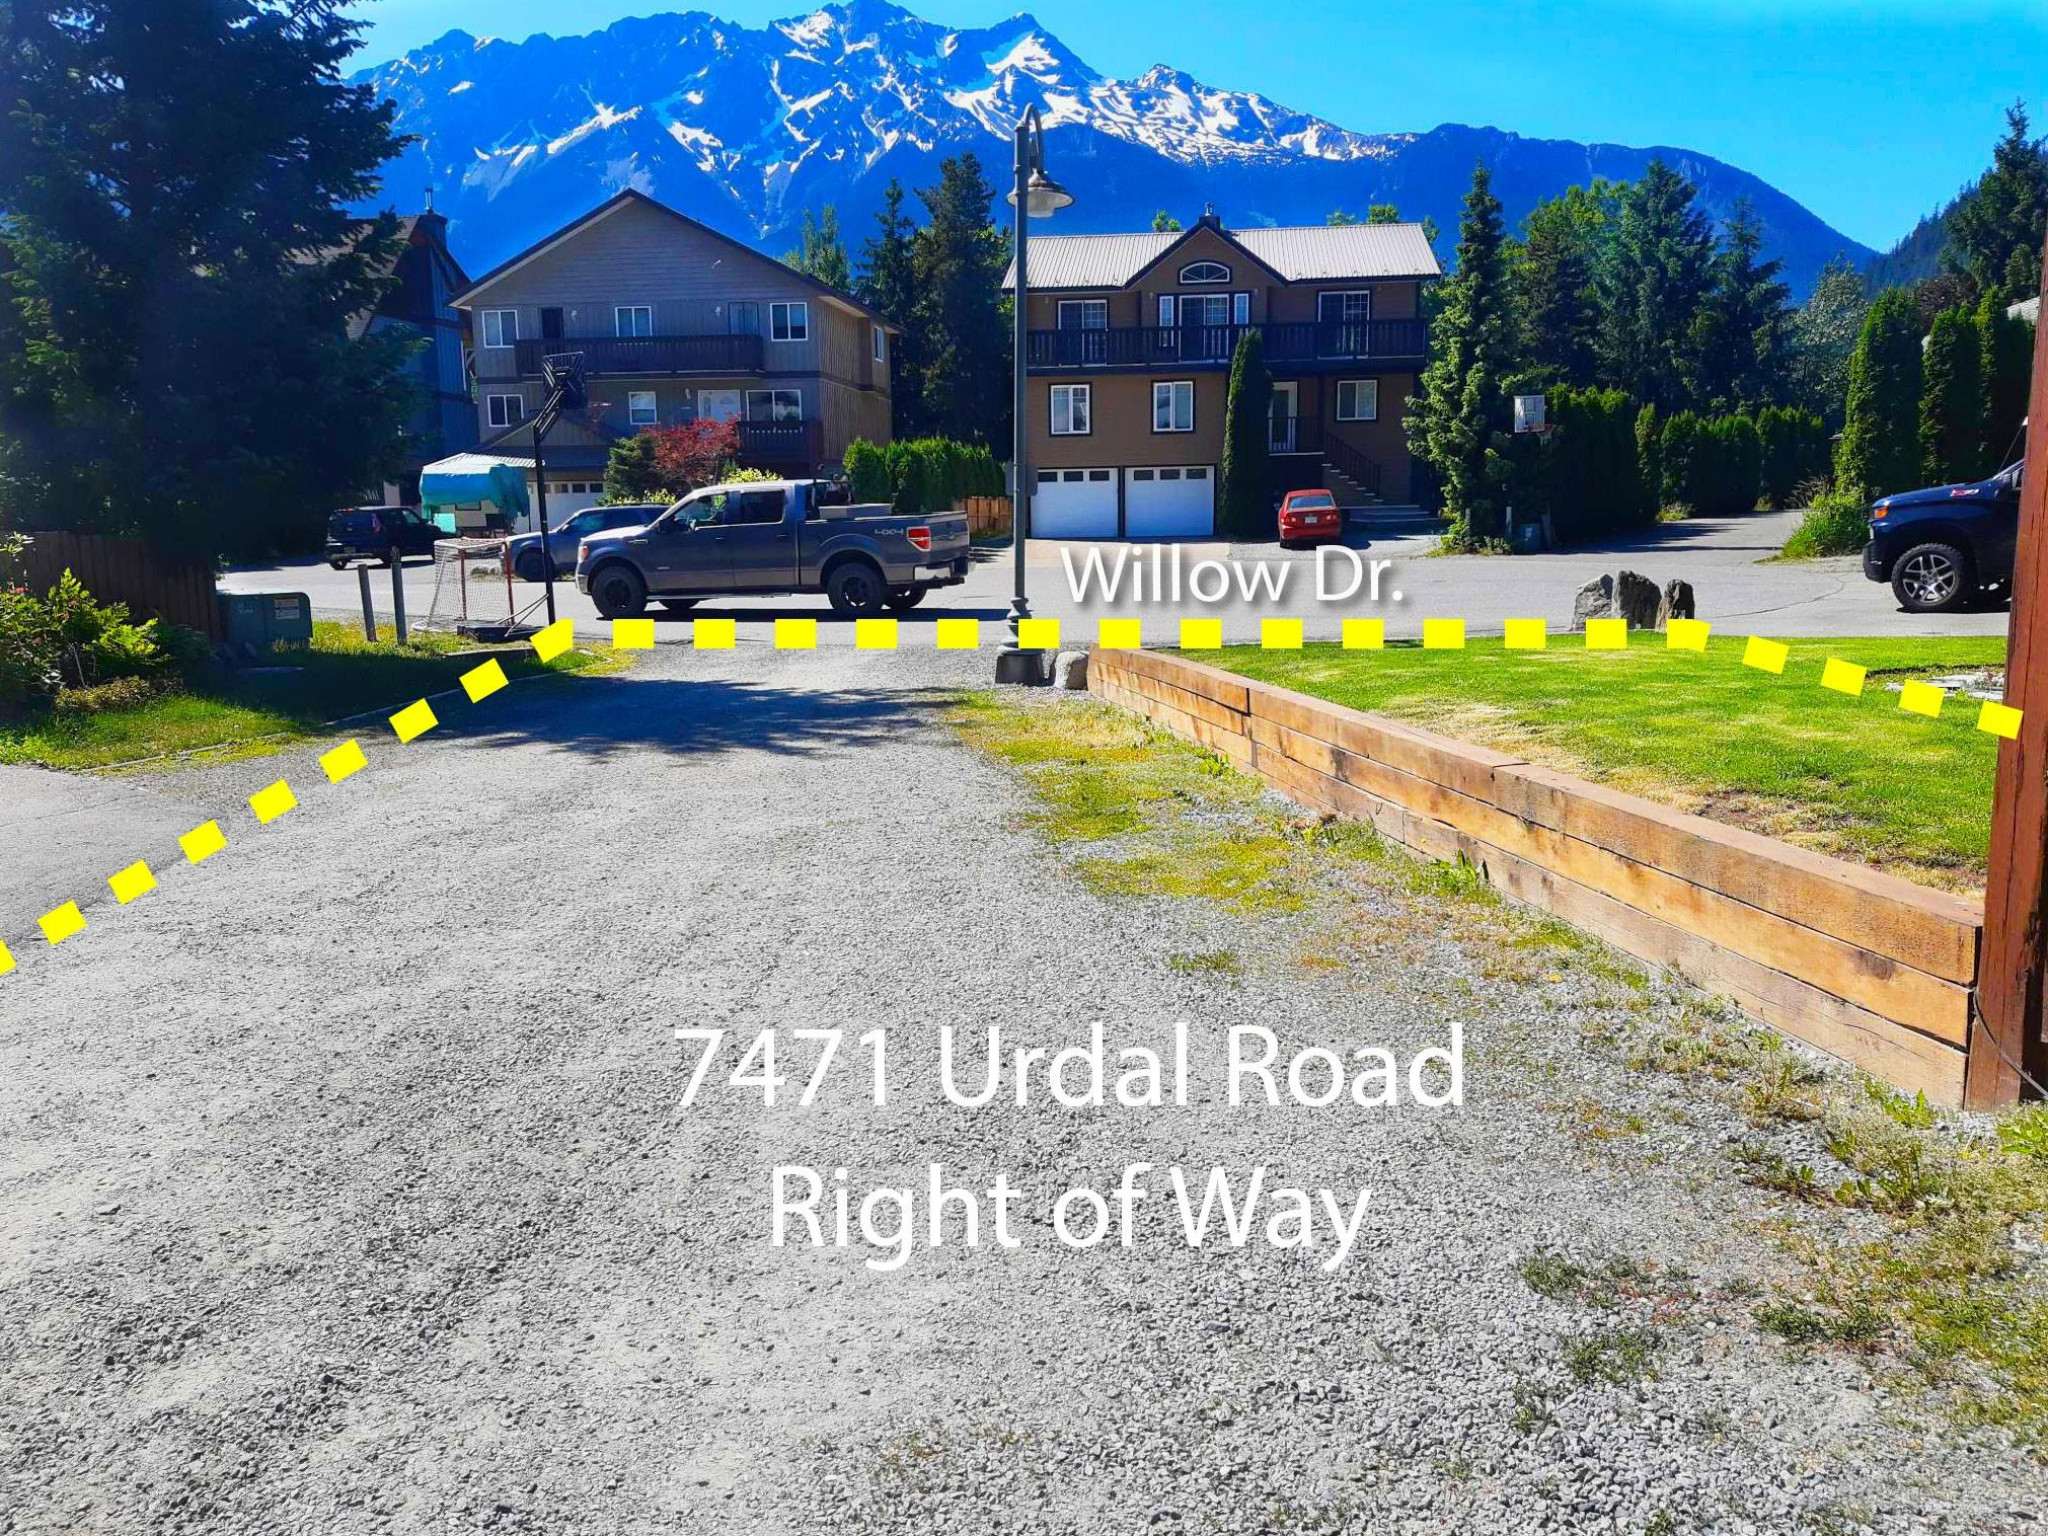 7471 Urdal Road image 12